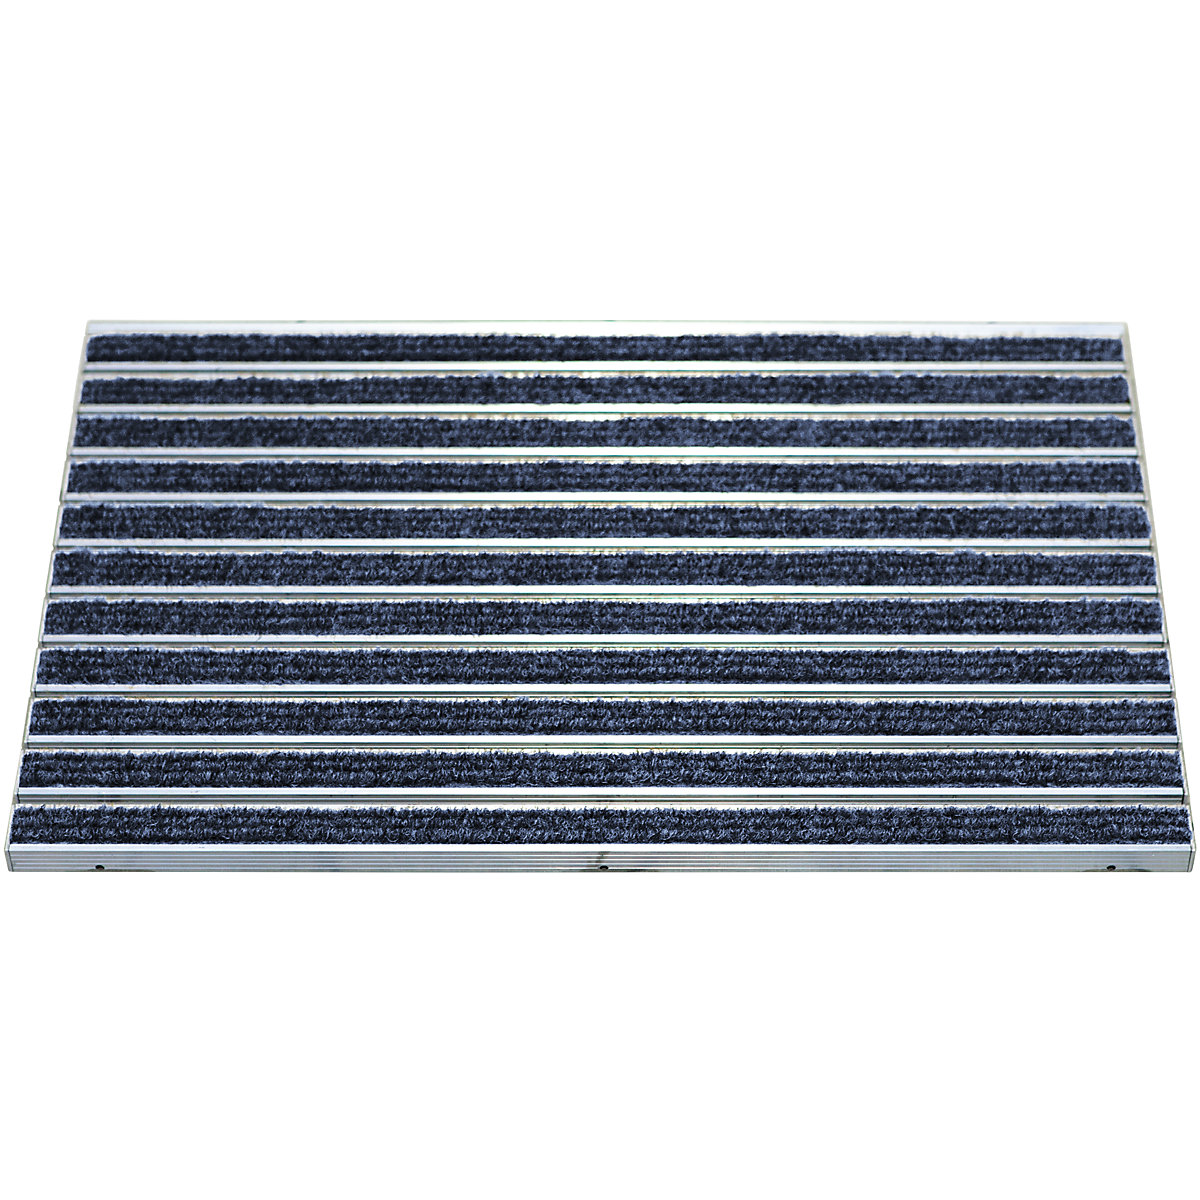 Aluminium profile entrance matting